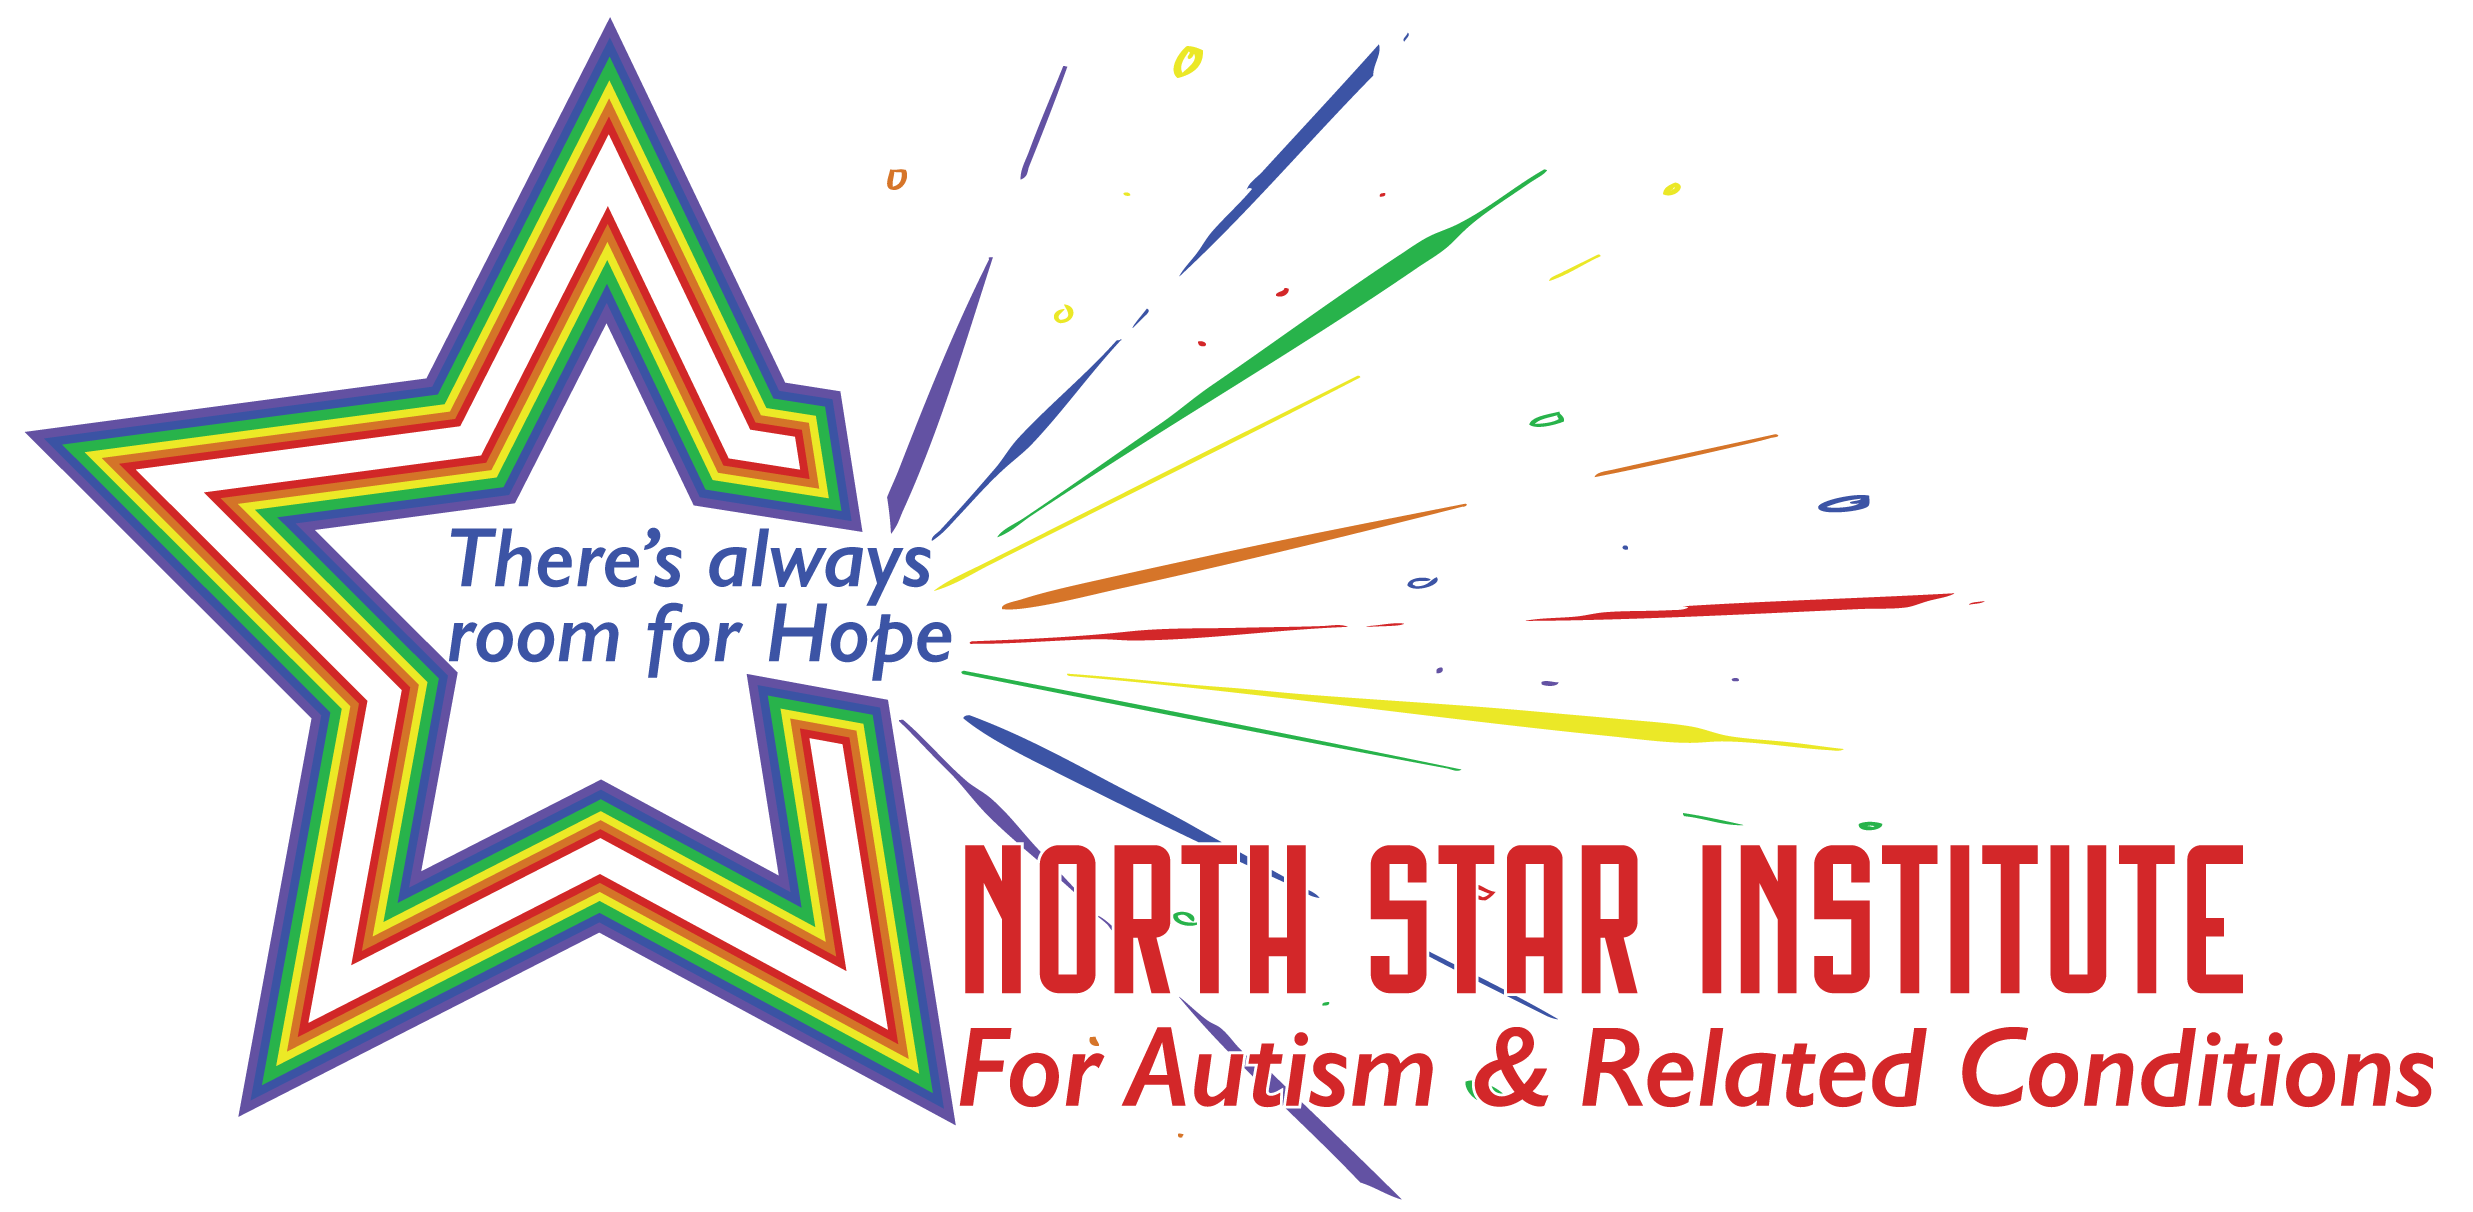 NorthStar Institute For Autism